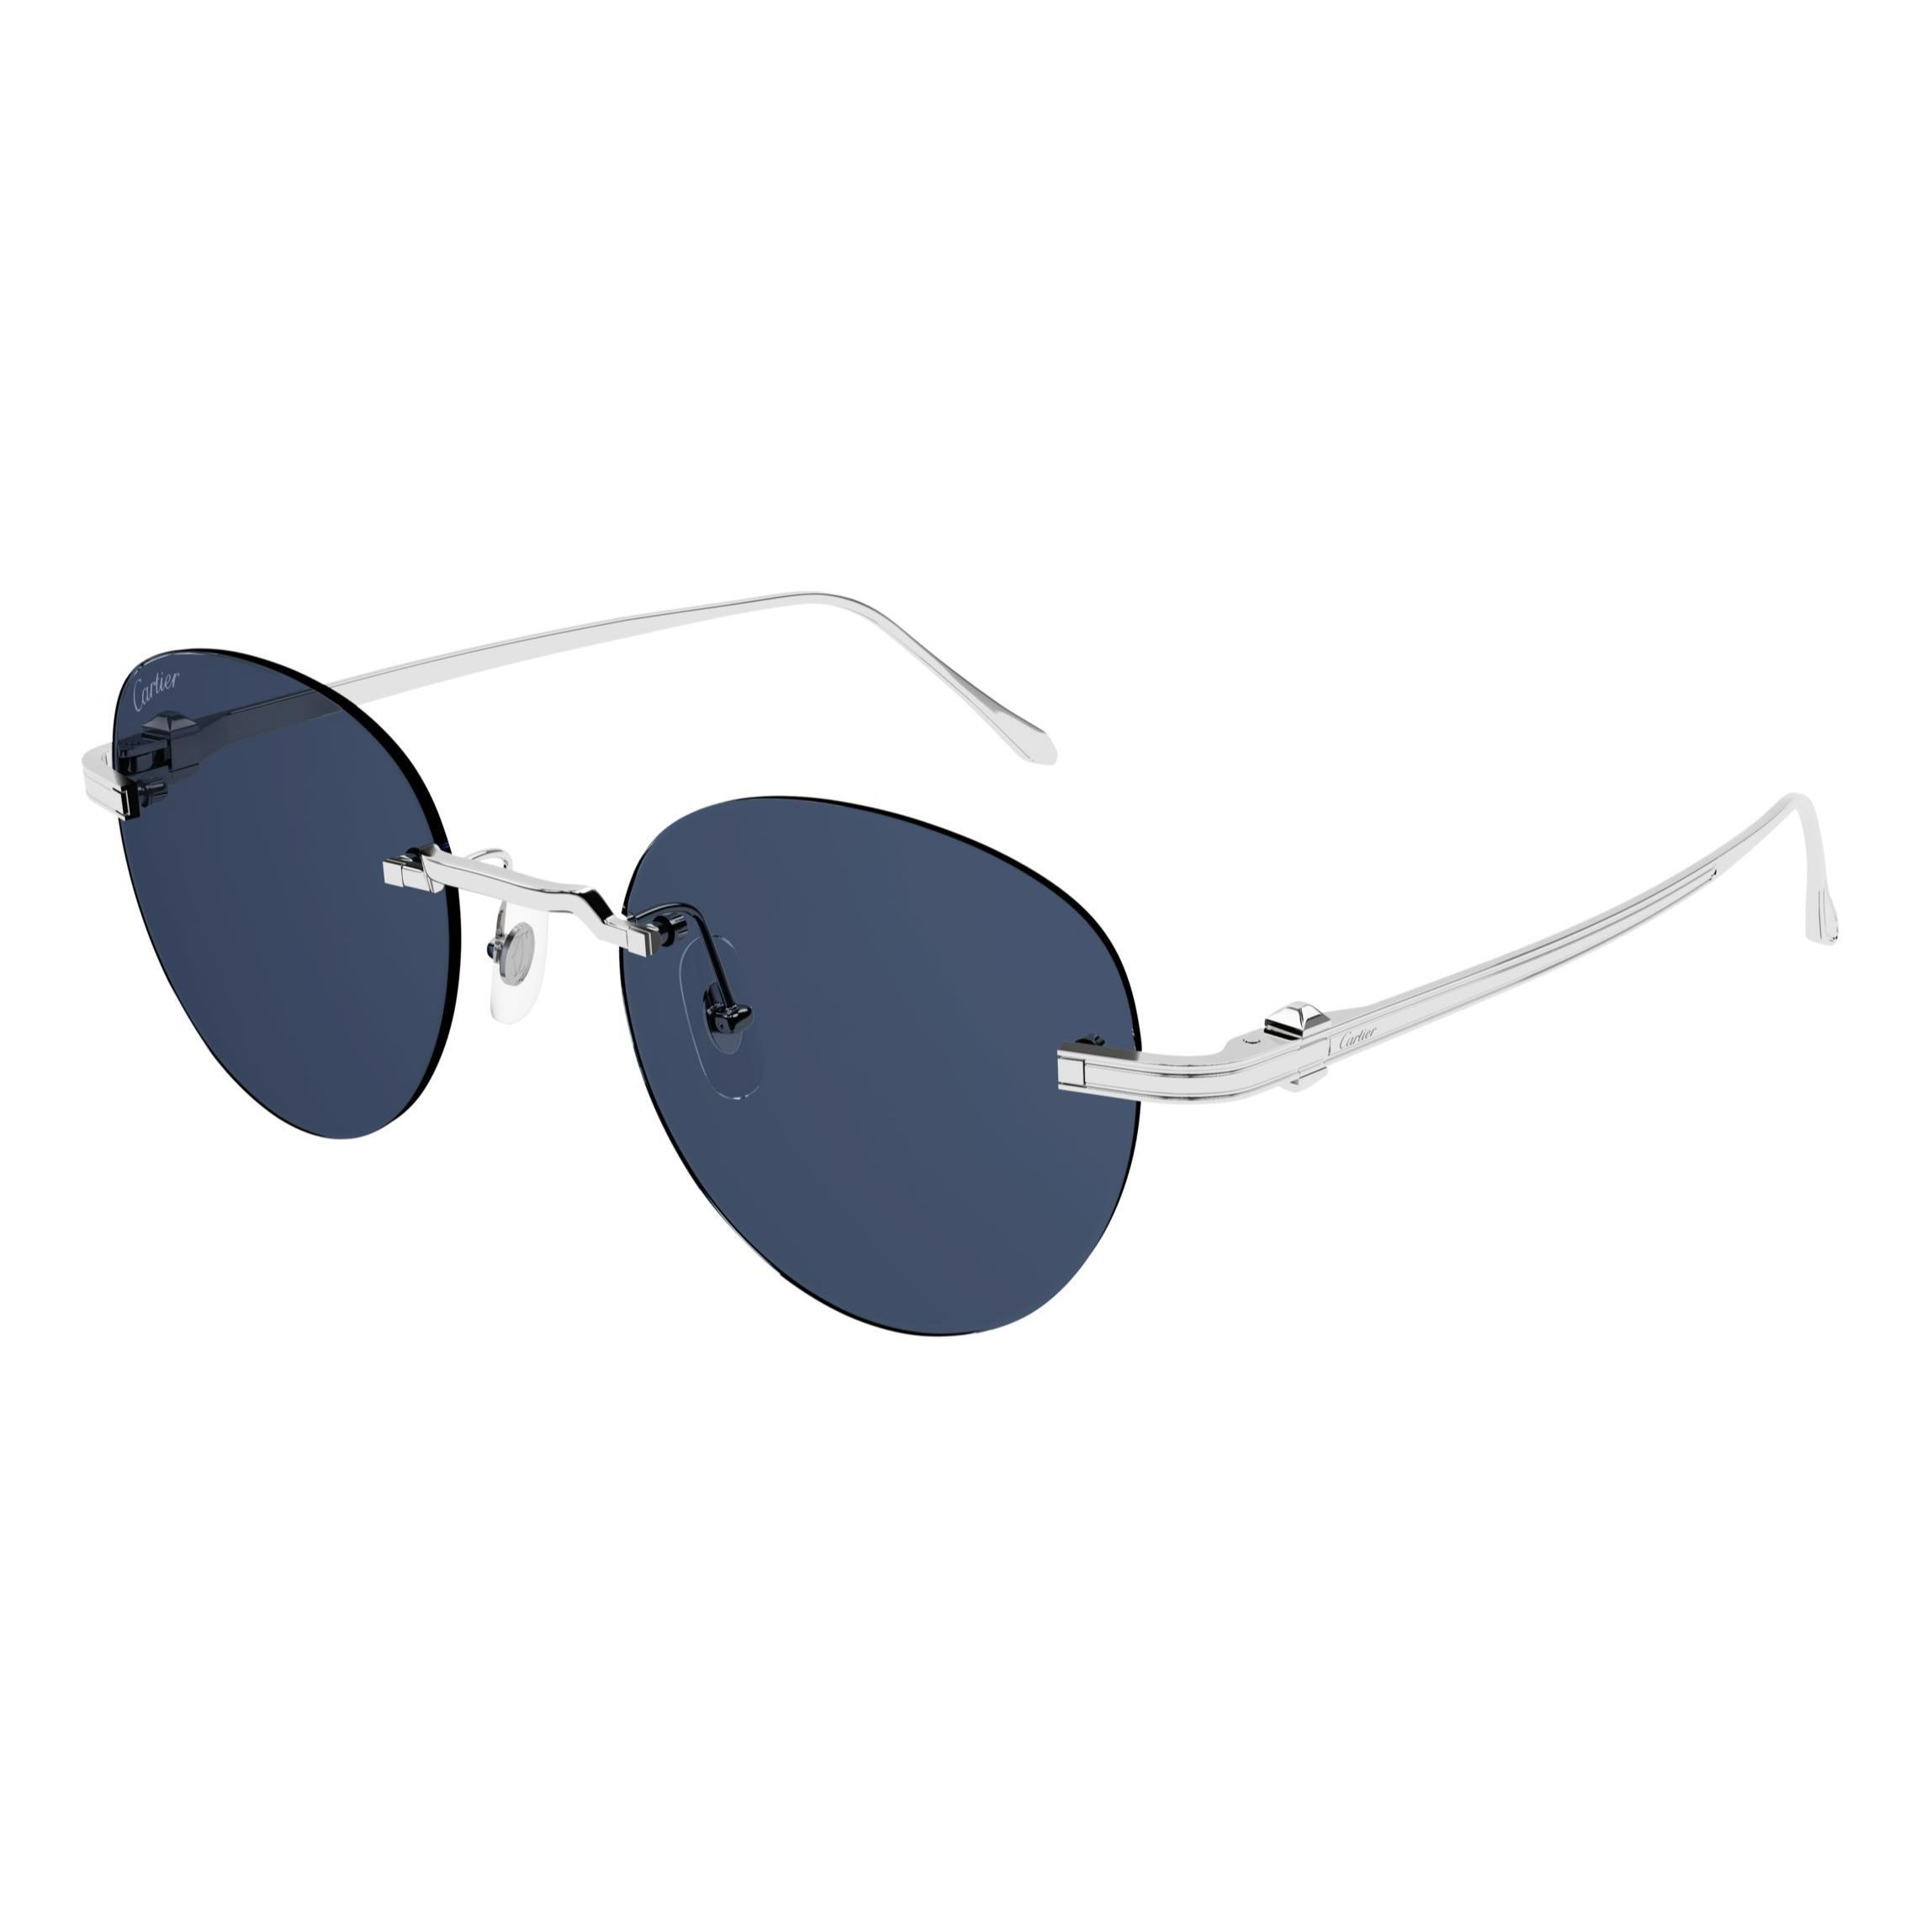 CT0331S Round Sunglasses 1 - size 51